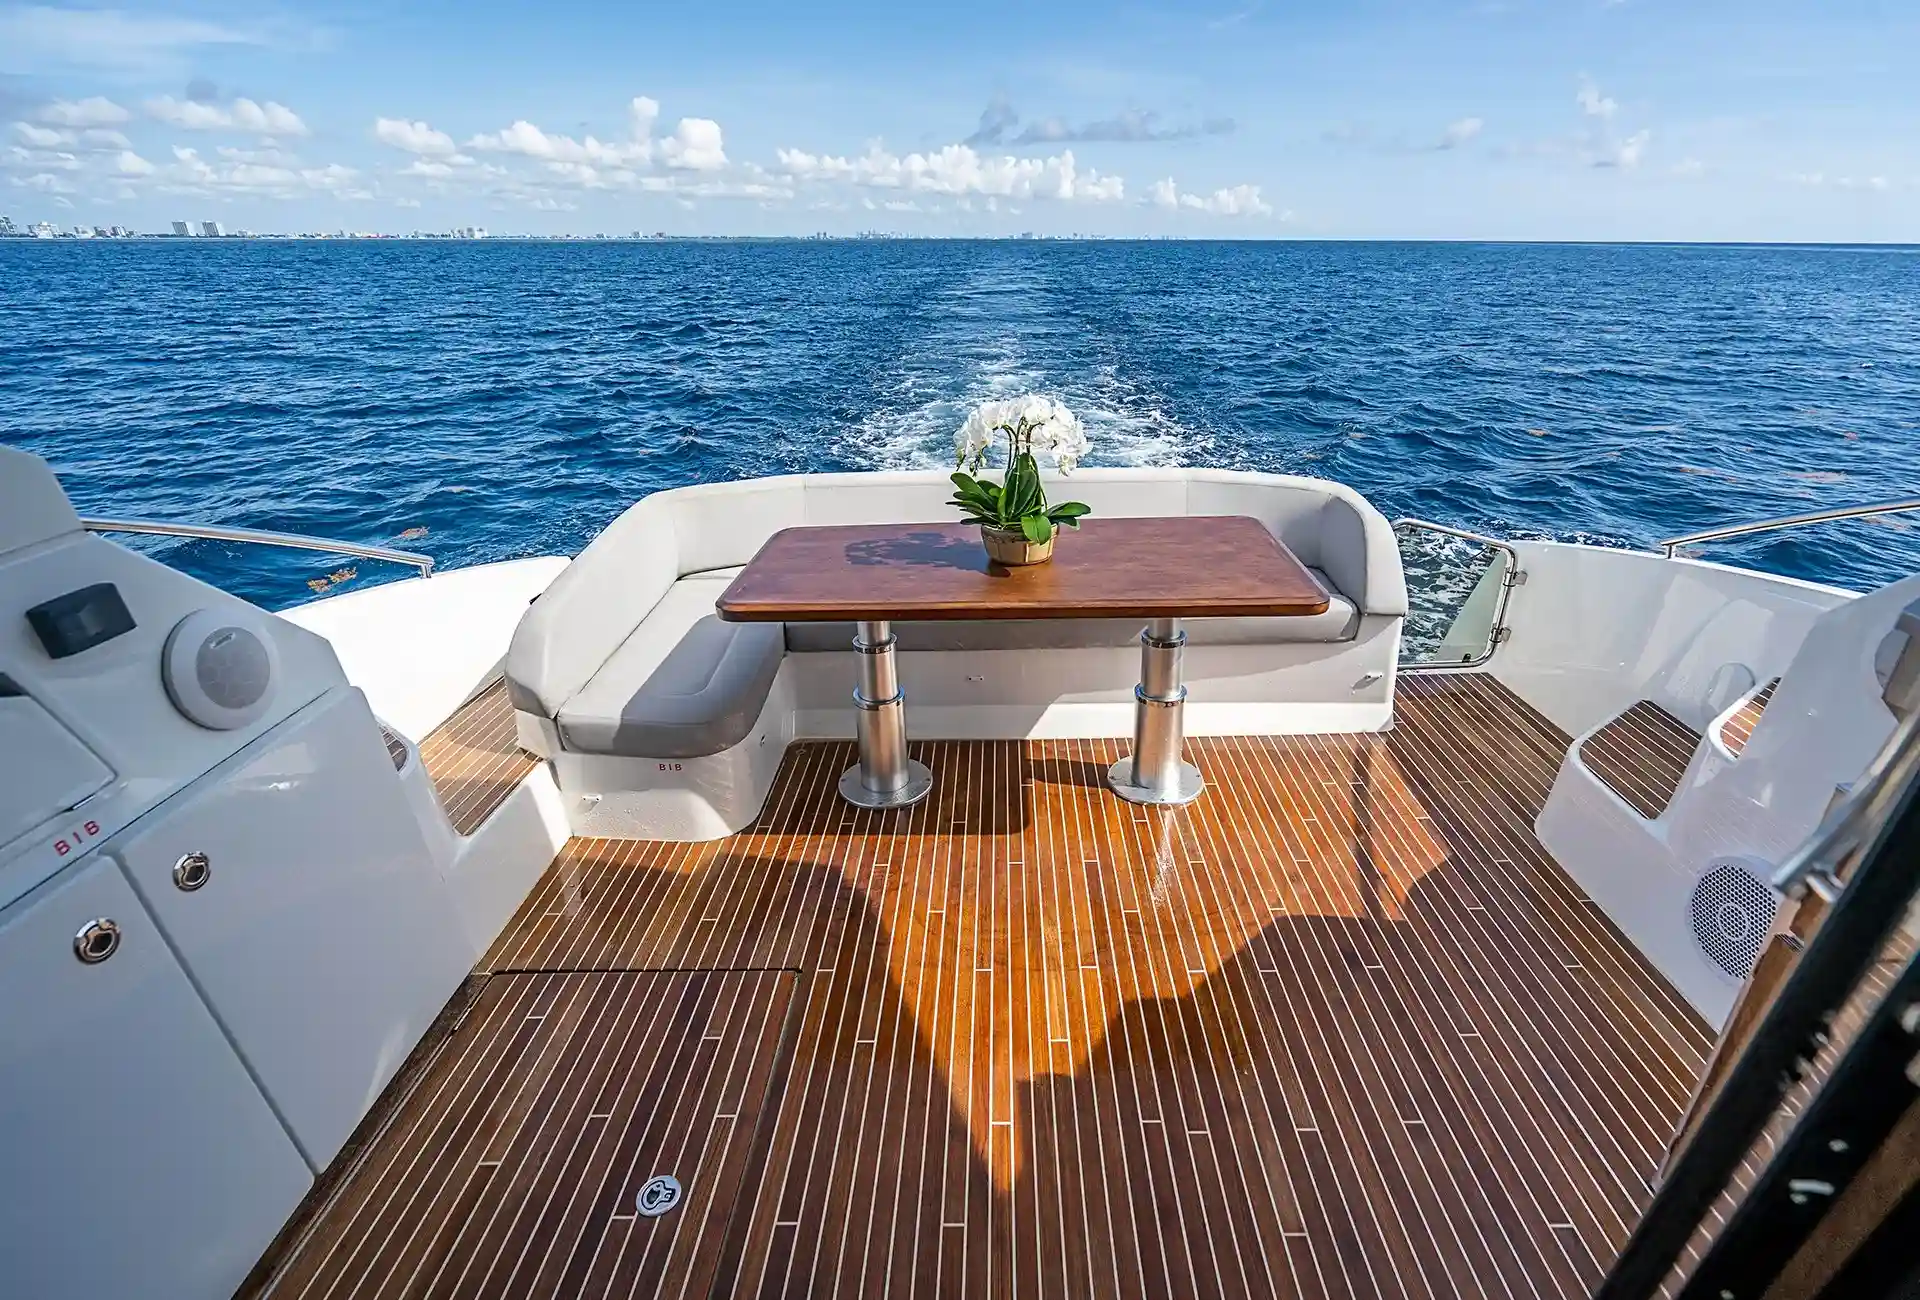 azimut s6 yacht for sale AMF aft deck exterior